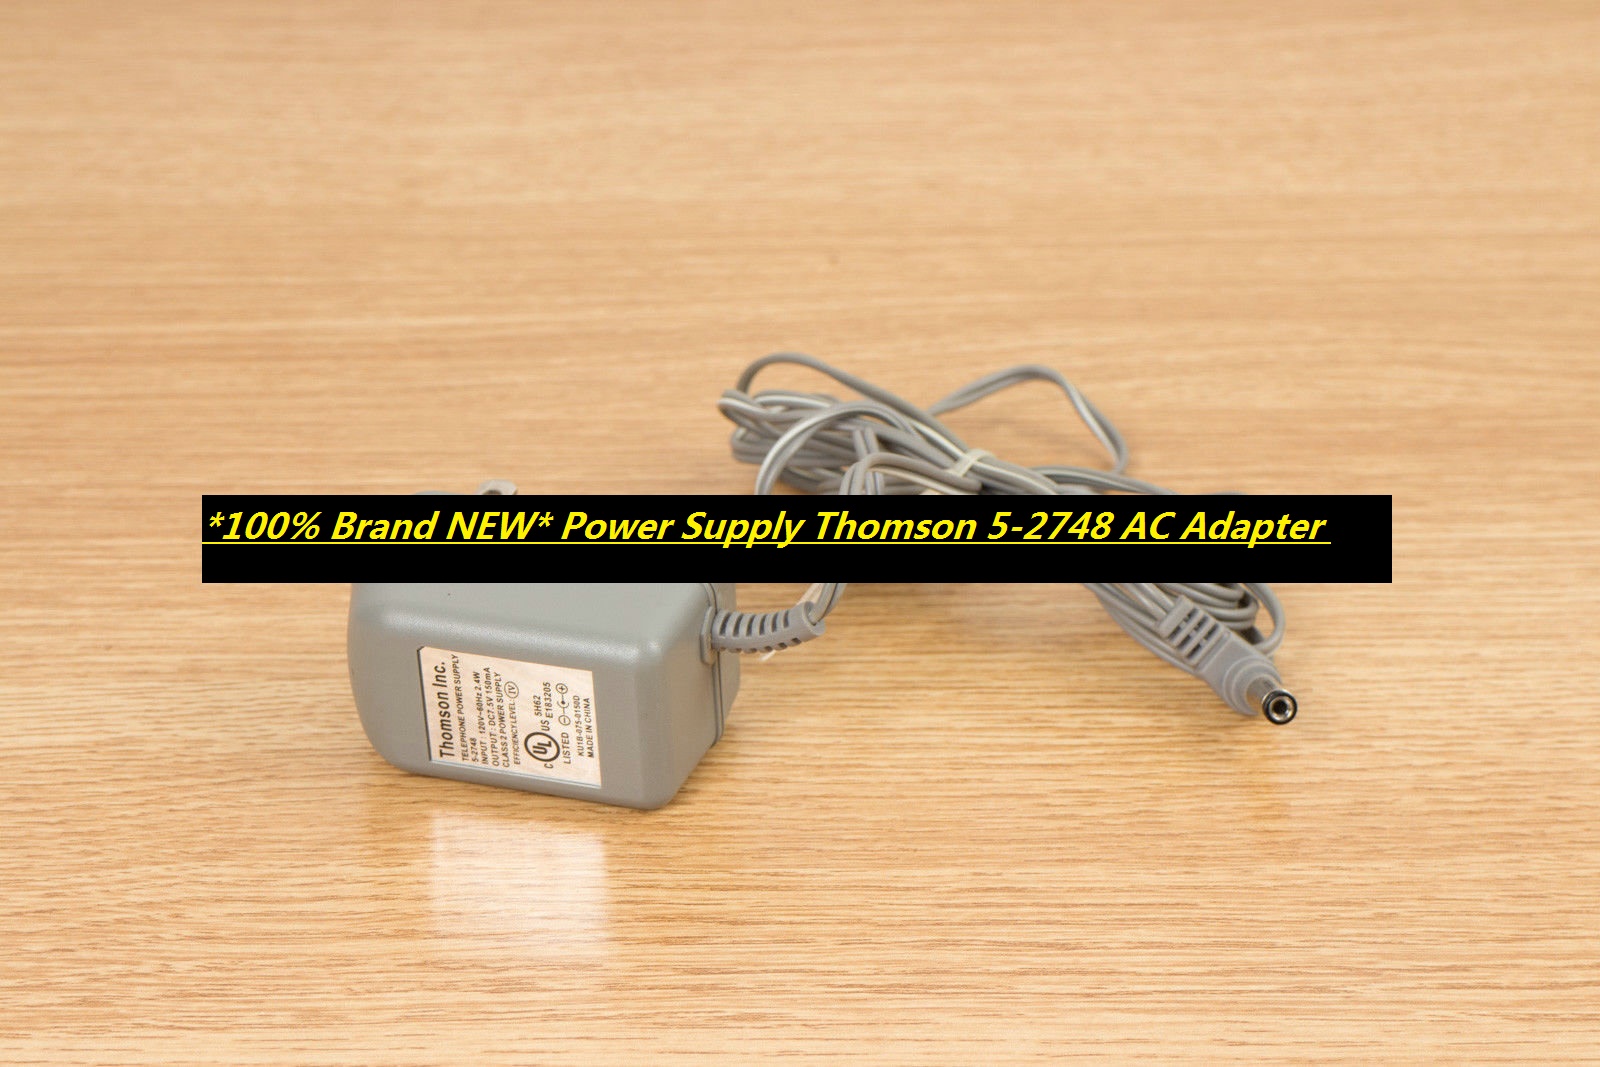 *100% Brand NEW* Power Supply Thomson 5-2748 AC Adapter